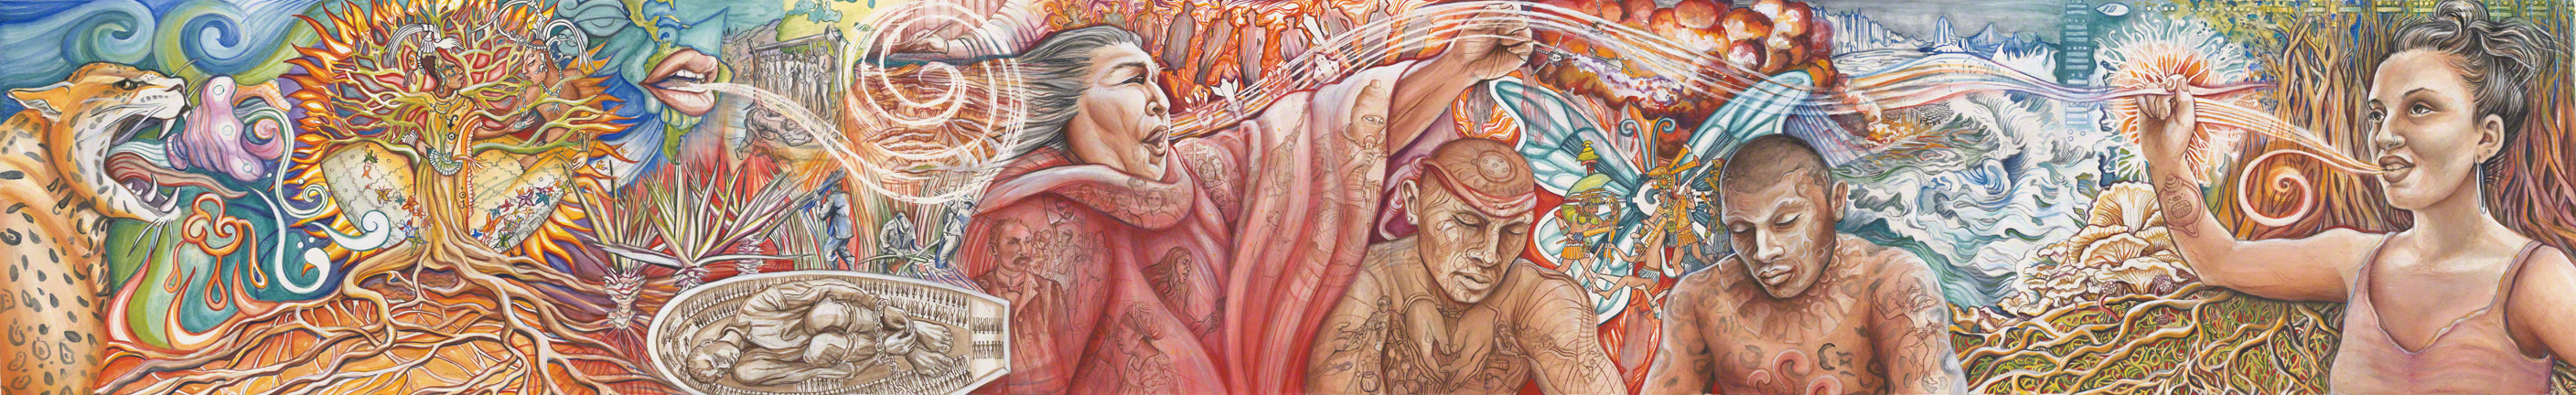 CODEX ESTANFOR, watercolor and digital print, detail of Stanford’s El Centro Chicano murals, 18.5” x 125”, Juana Alicia ©2012.